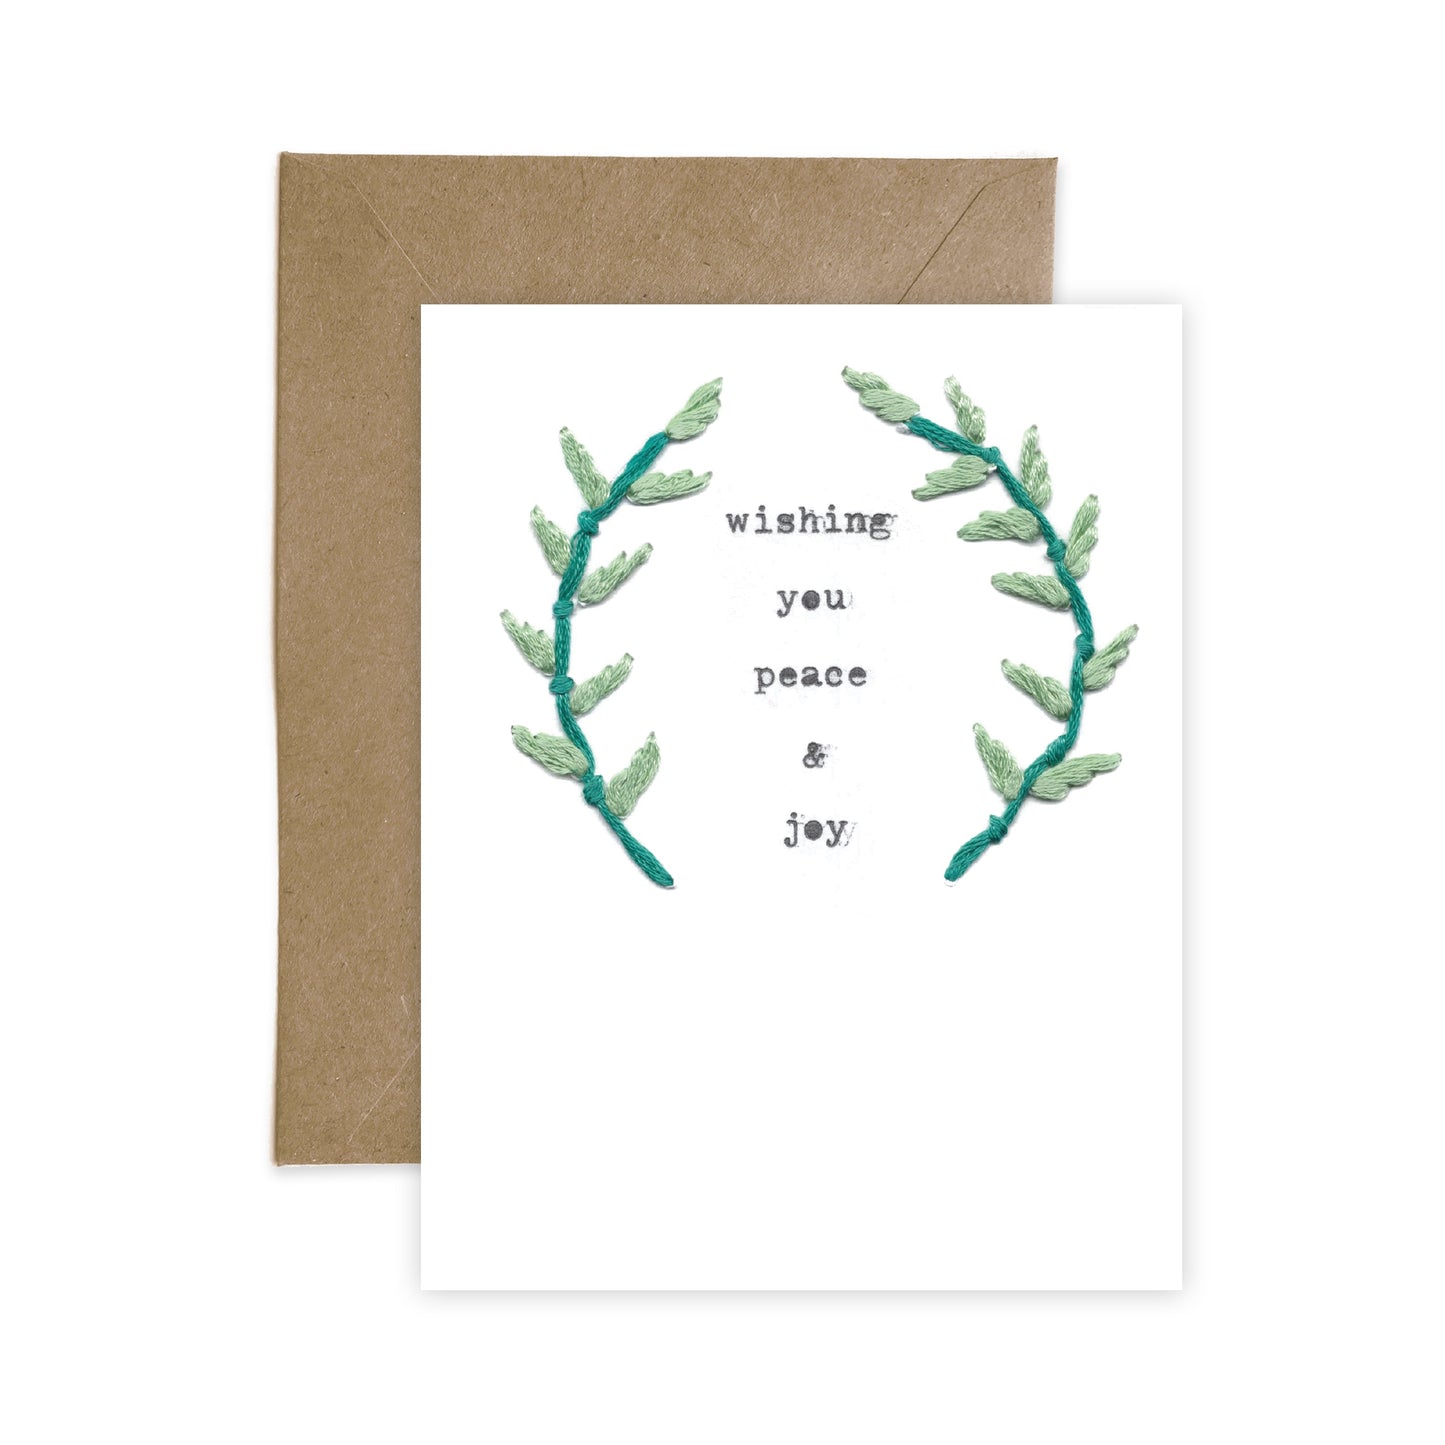 Wishing You Peace & Joy (Single Card) A2 card Tiny and Snail